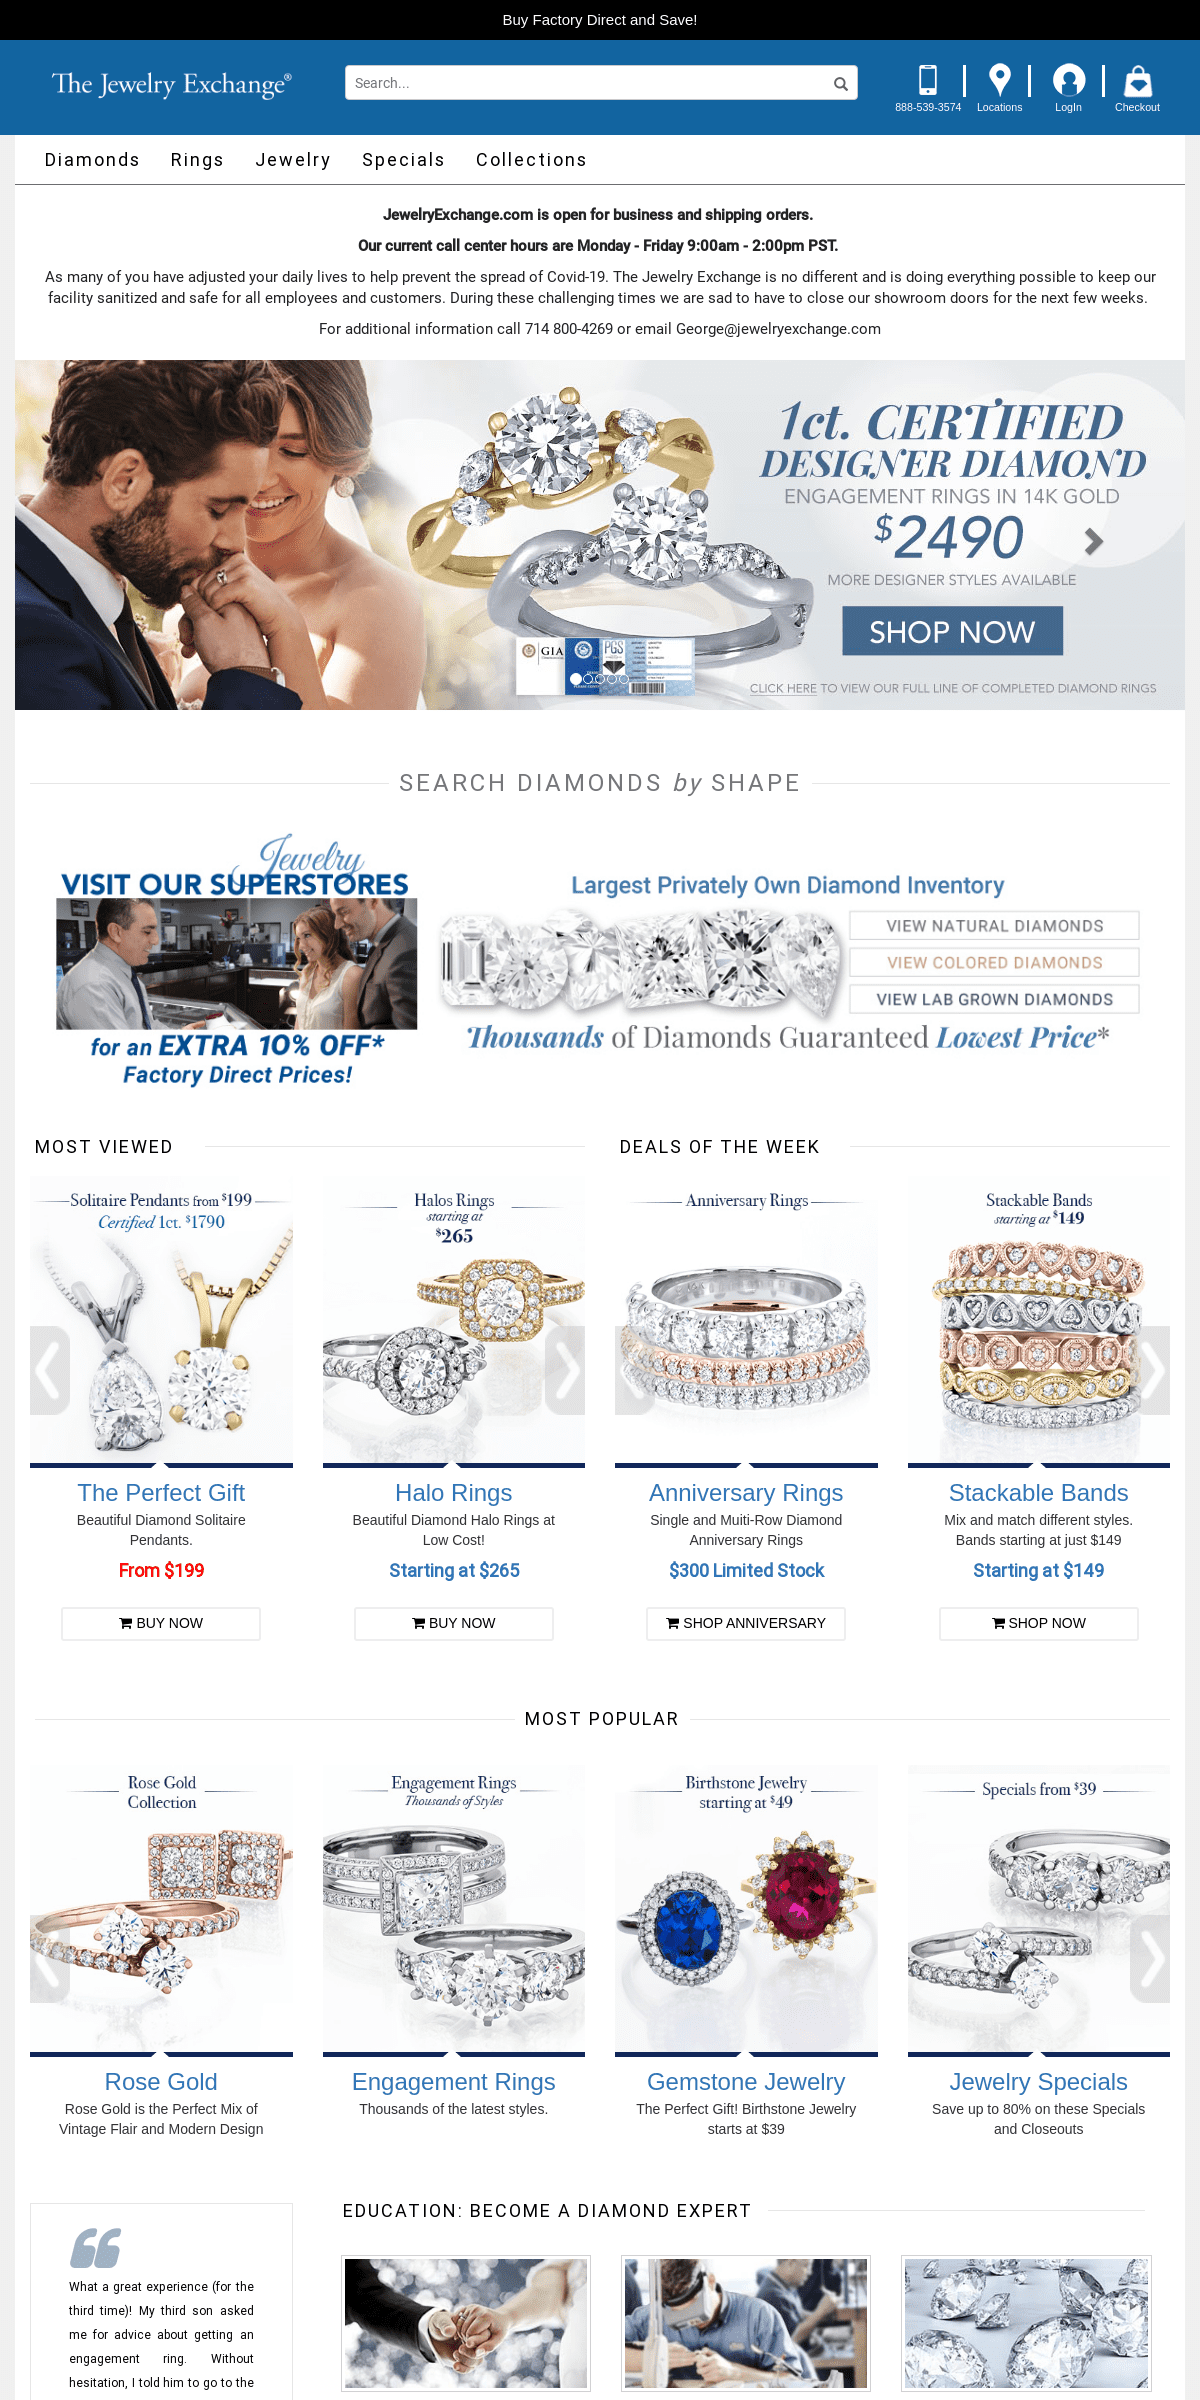 A complete backup of jewelryexchange.com